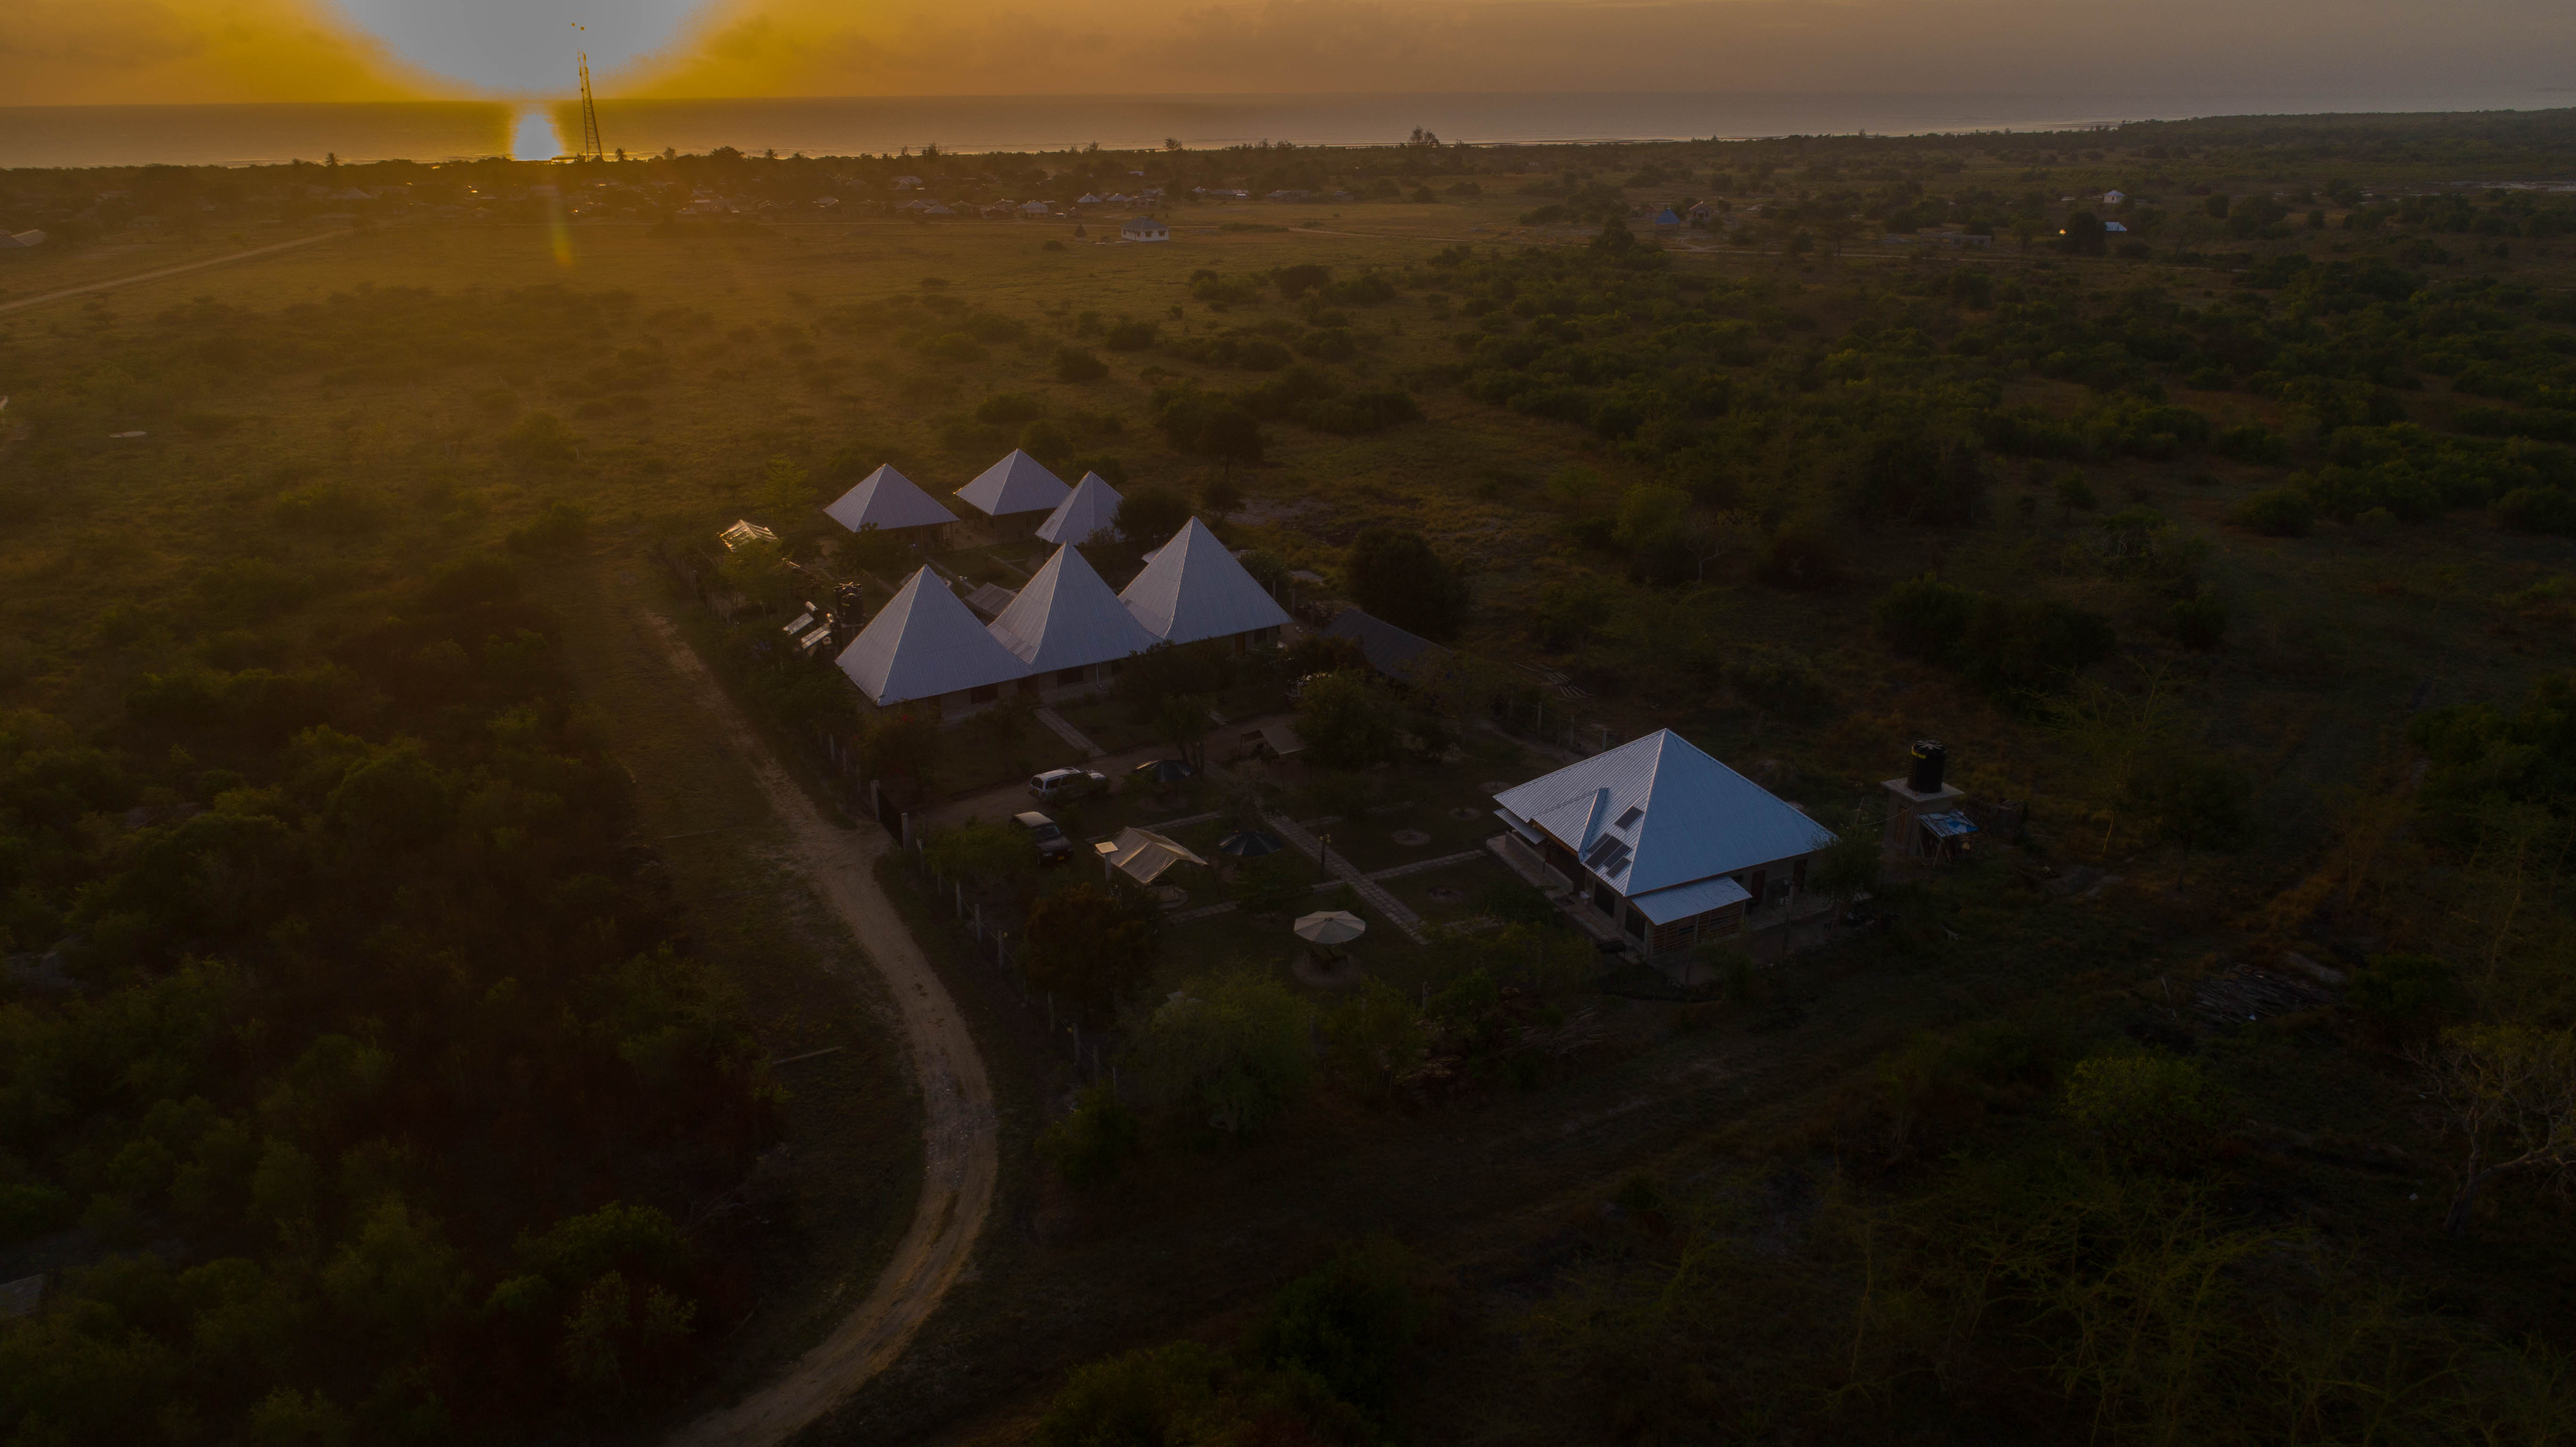 Tanganyika Coastal Campsite Lodge gazing in the Sunset of Saadani National Park